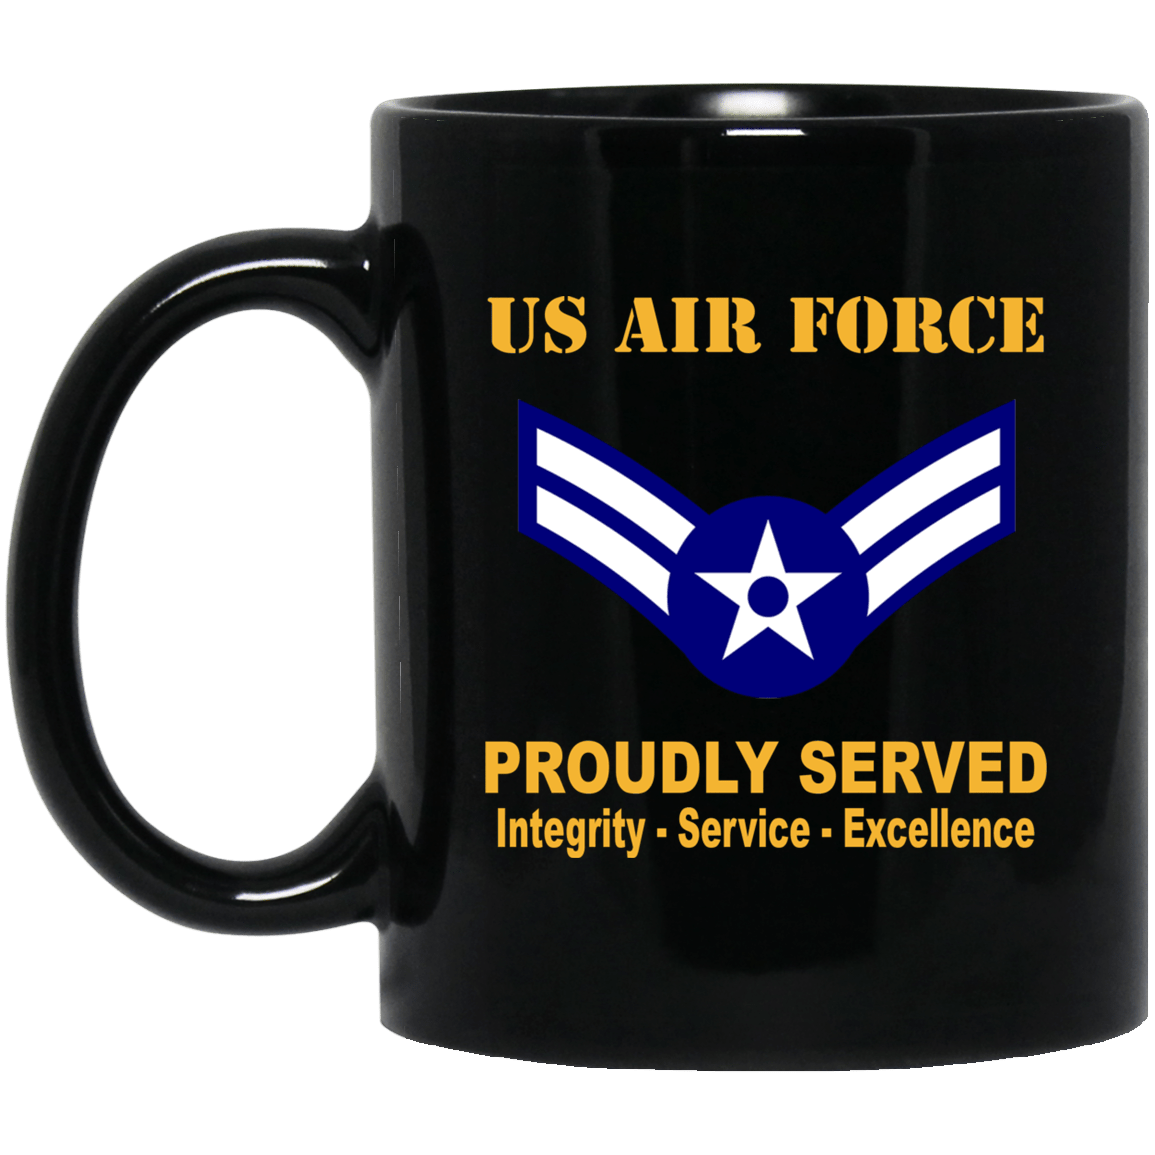 US Air Force E-3 Airman First Class A1C E3 Ranks Enlisted Airman AF Rank Proudly Served Black Mug 11 oz - 15 oz-Mug-USAF-Ranks-Veterans Nation